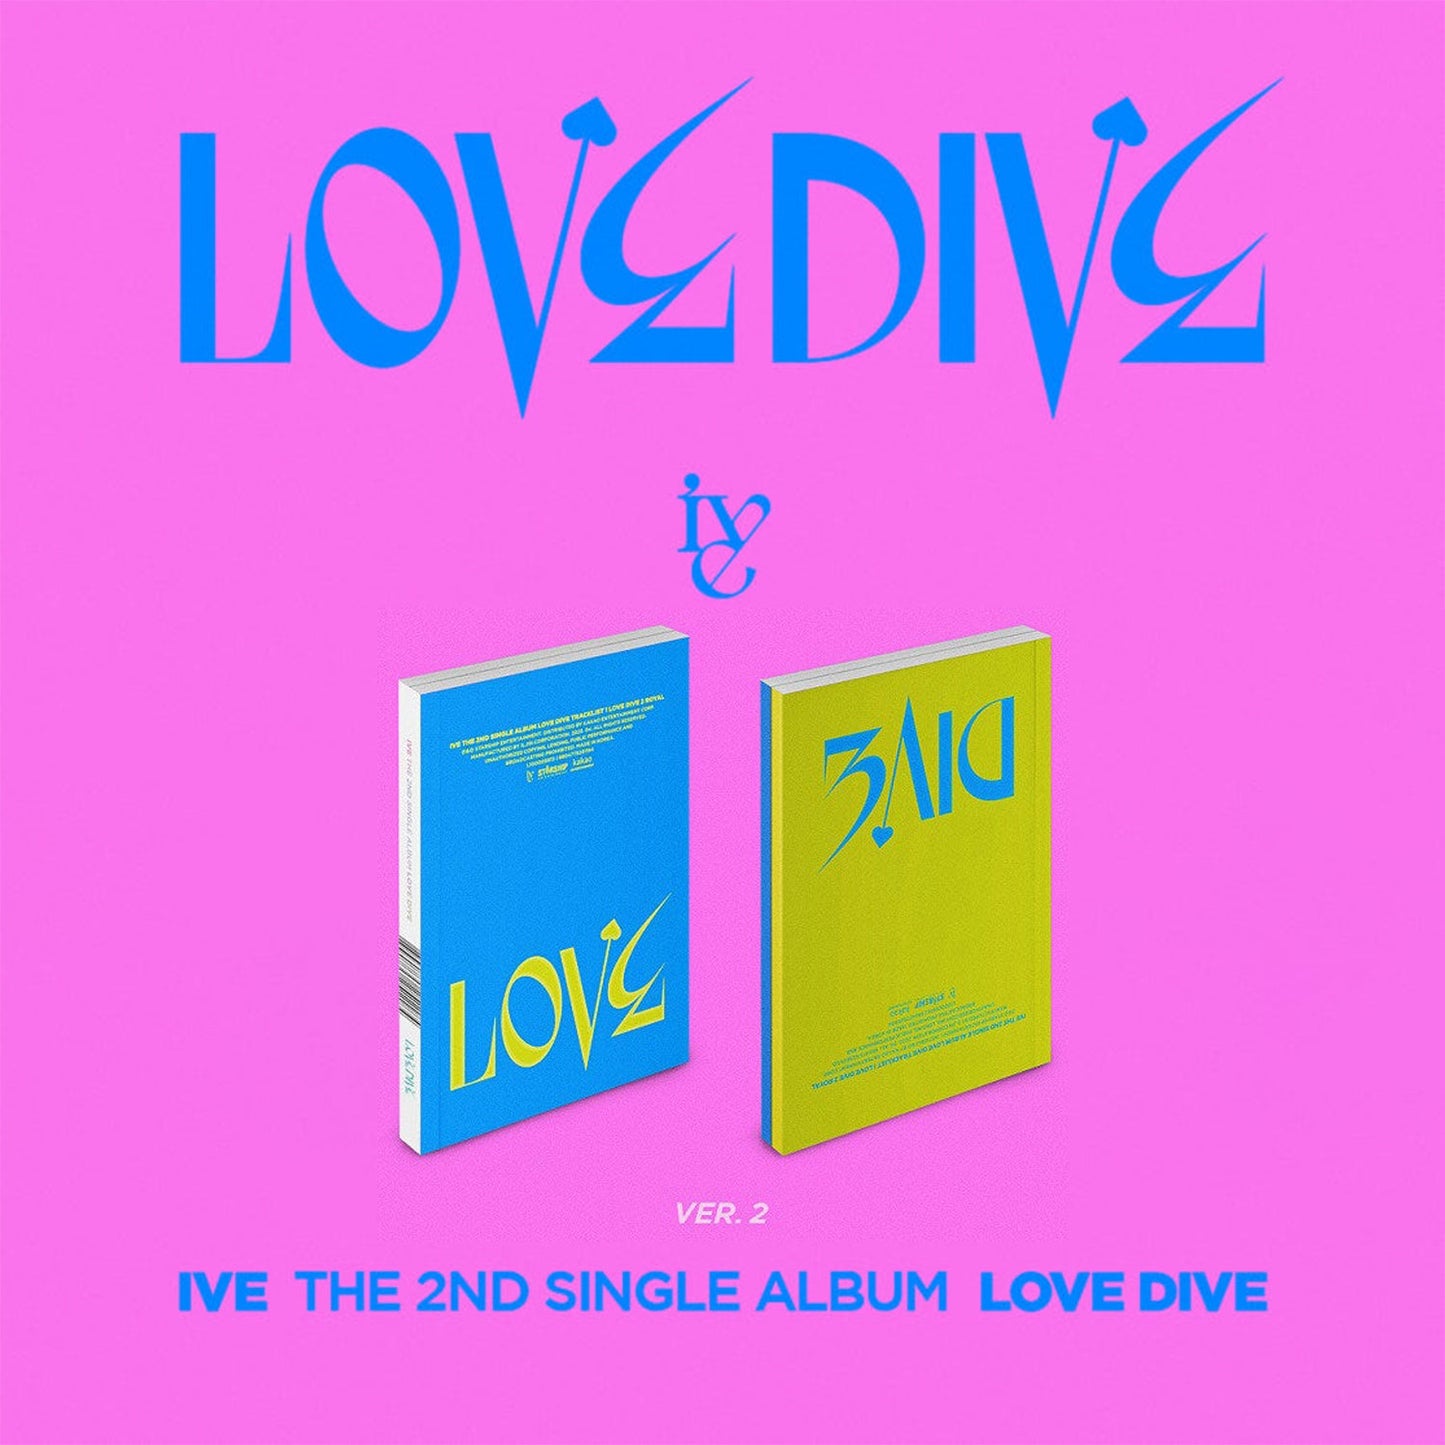 IVE 2ND SINGLE ALBUM 'LOVE DIVE' VERSION 2 COVER